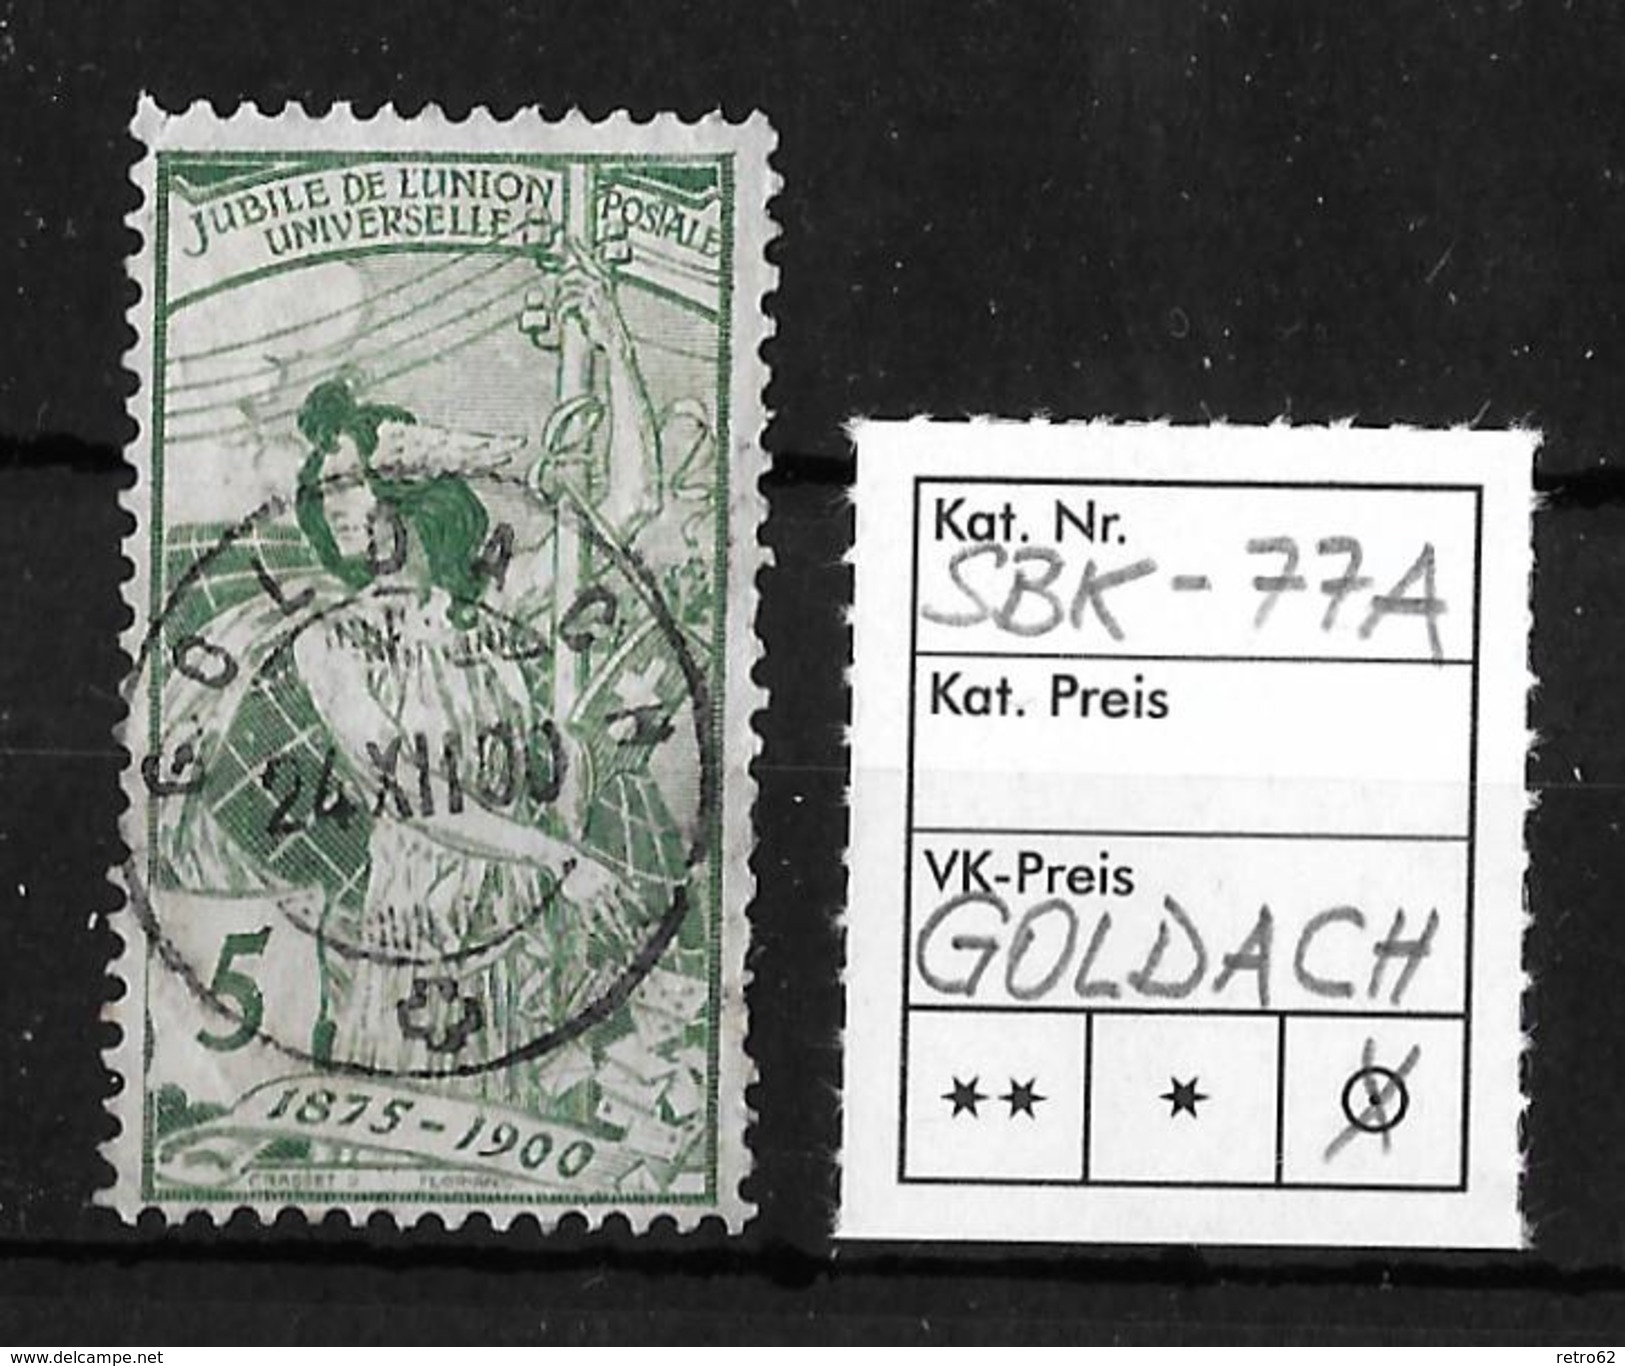 25 JAHRE WELTPOSTVEREIN  &#x25BA;SBK-77A, GOLDACH 26.XII.00&#x25C4; - Used Stamps